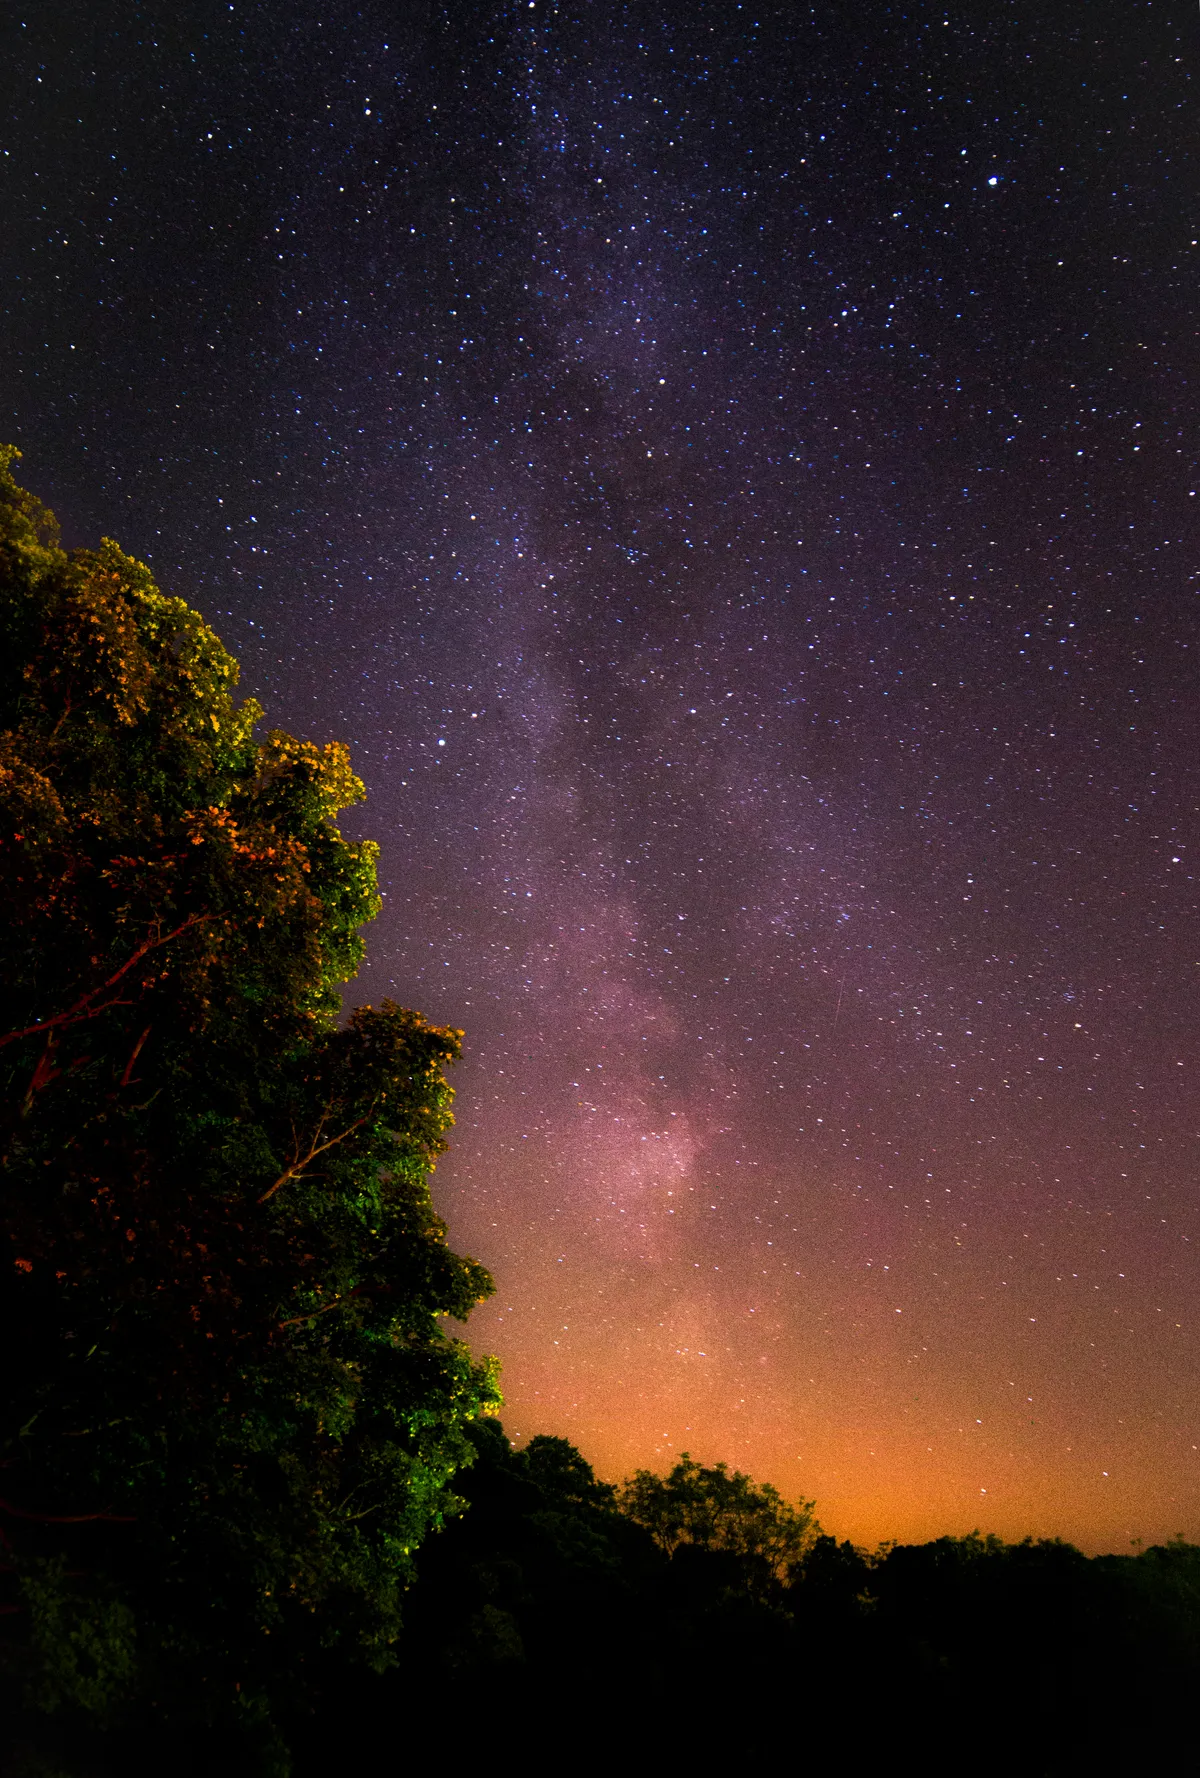 Backyard Milky Way Tree by Brinton Darnell, Grosmont, N. Yorkshire, UK. Equipment: Nikon D3100, Samyang 14mm lens, Tripod.